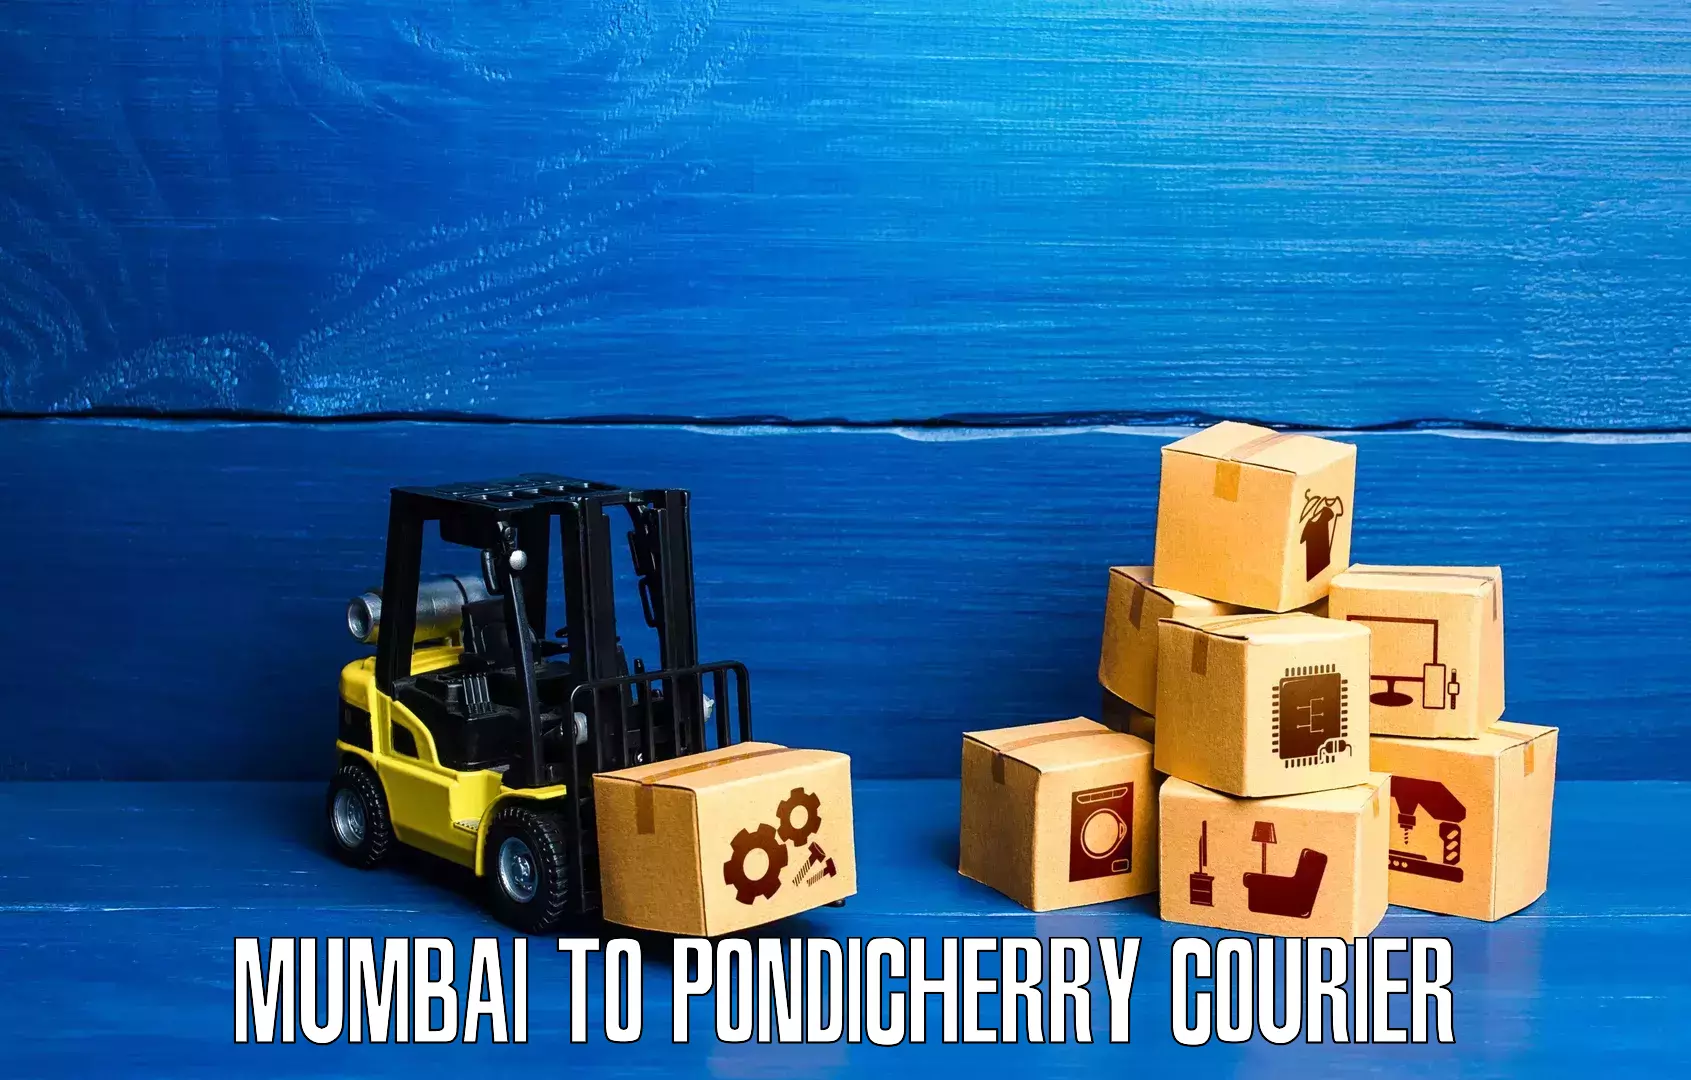 Express delivery network Mumbai to Pondicherry